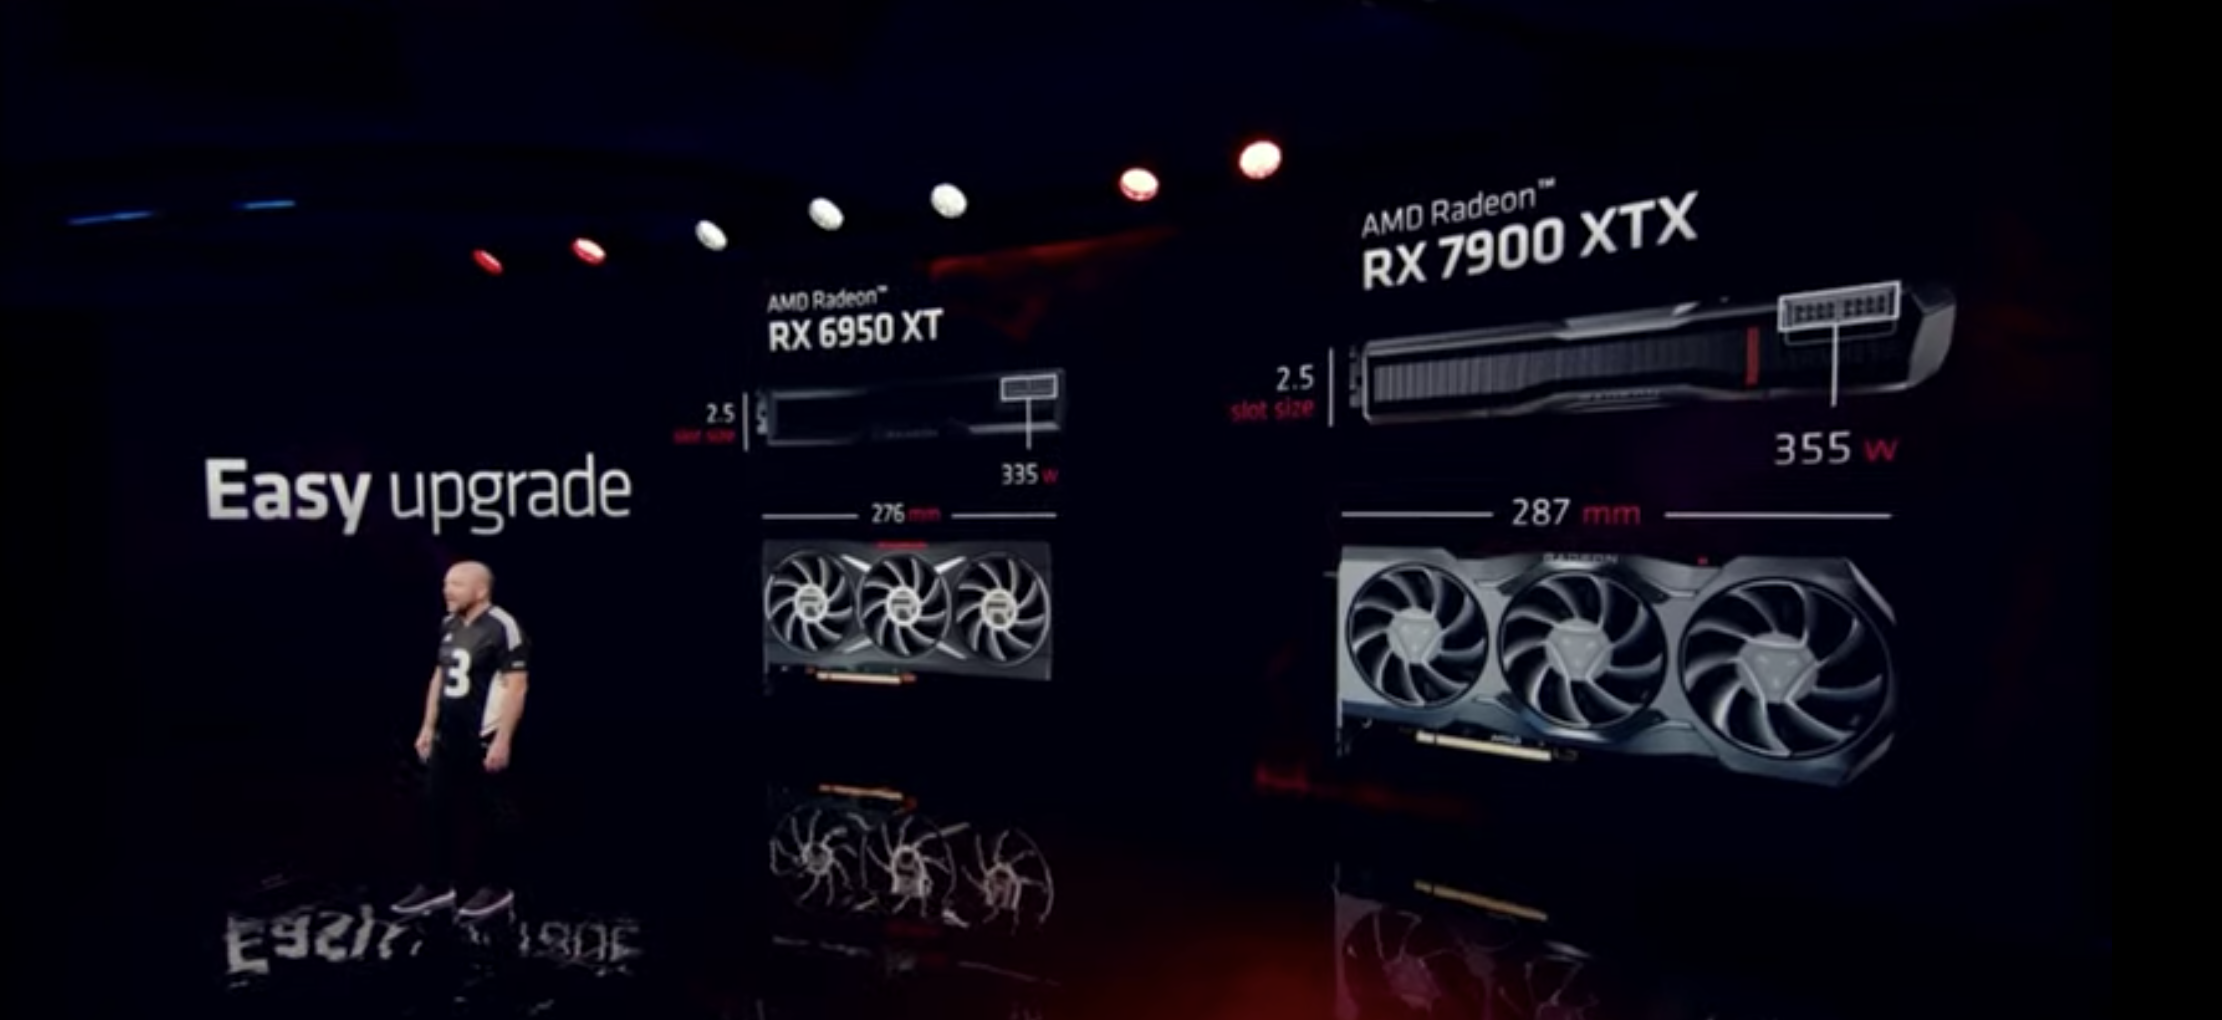 Radeon RX 7900 XTX